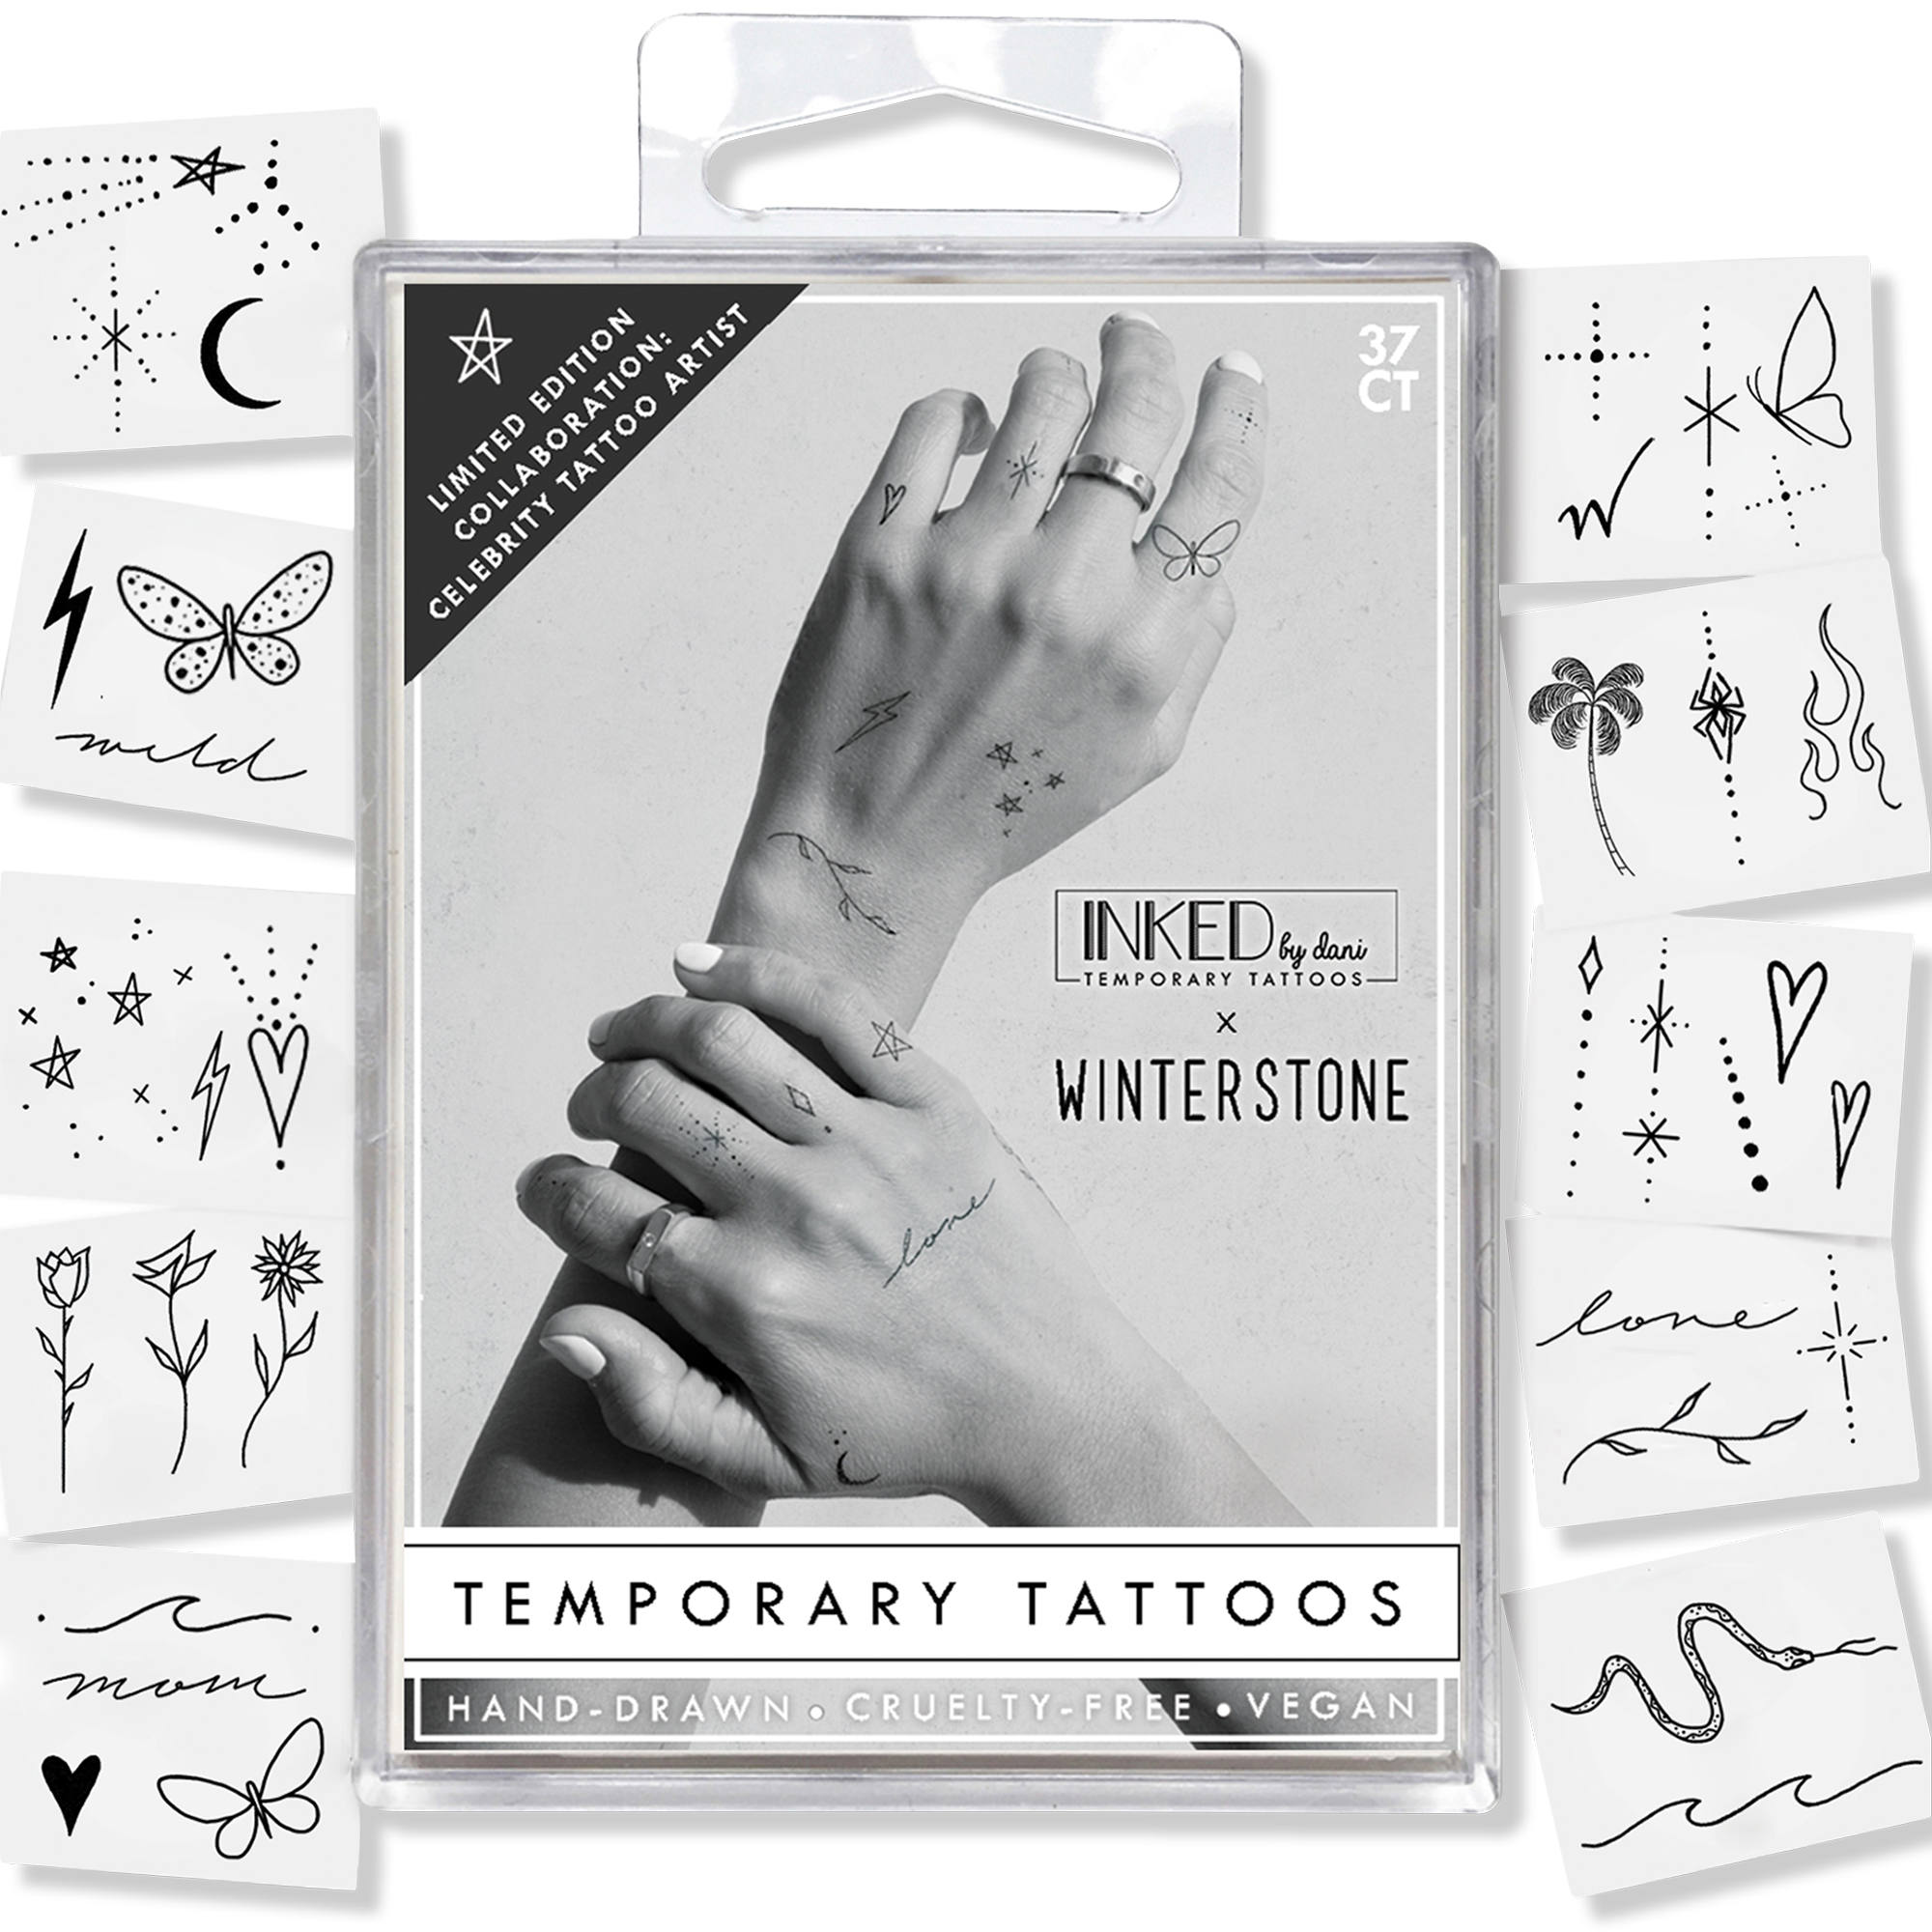 Ulta temporary tattoos